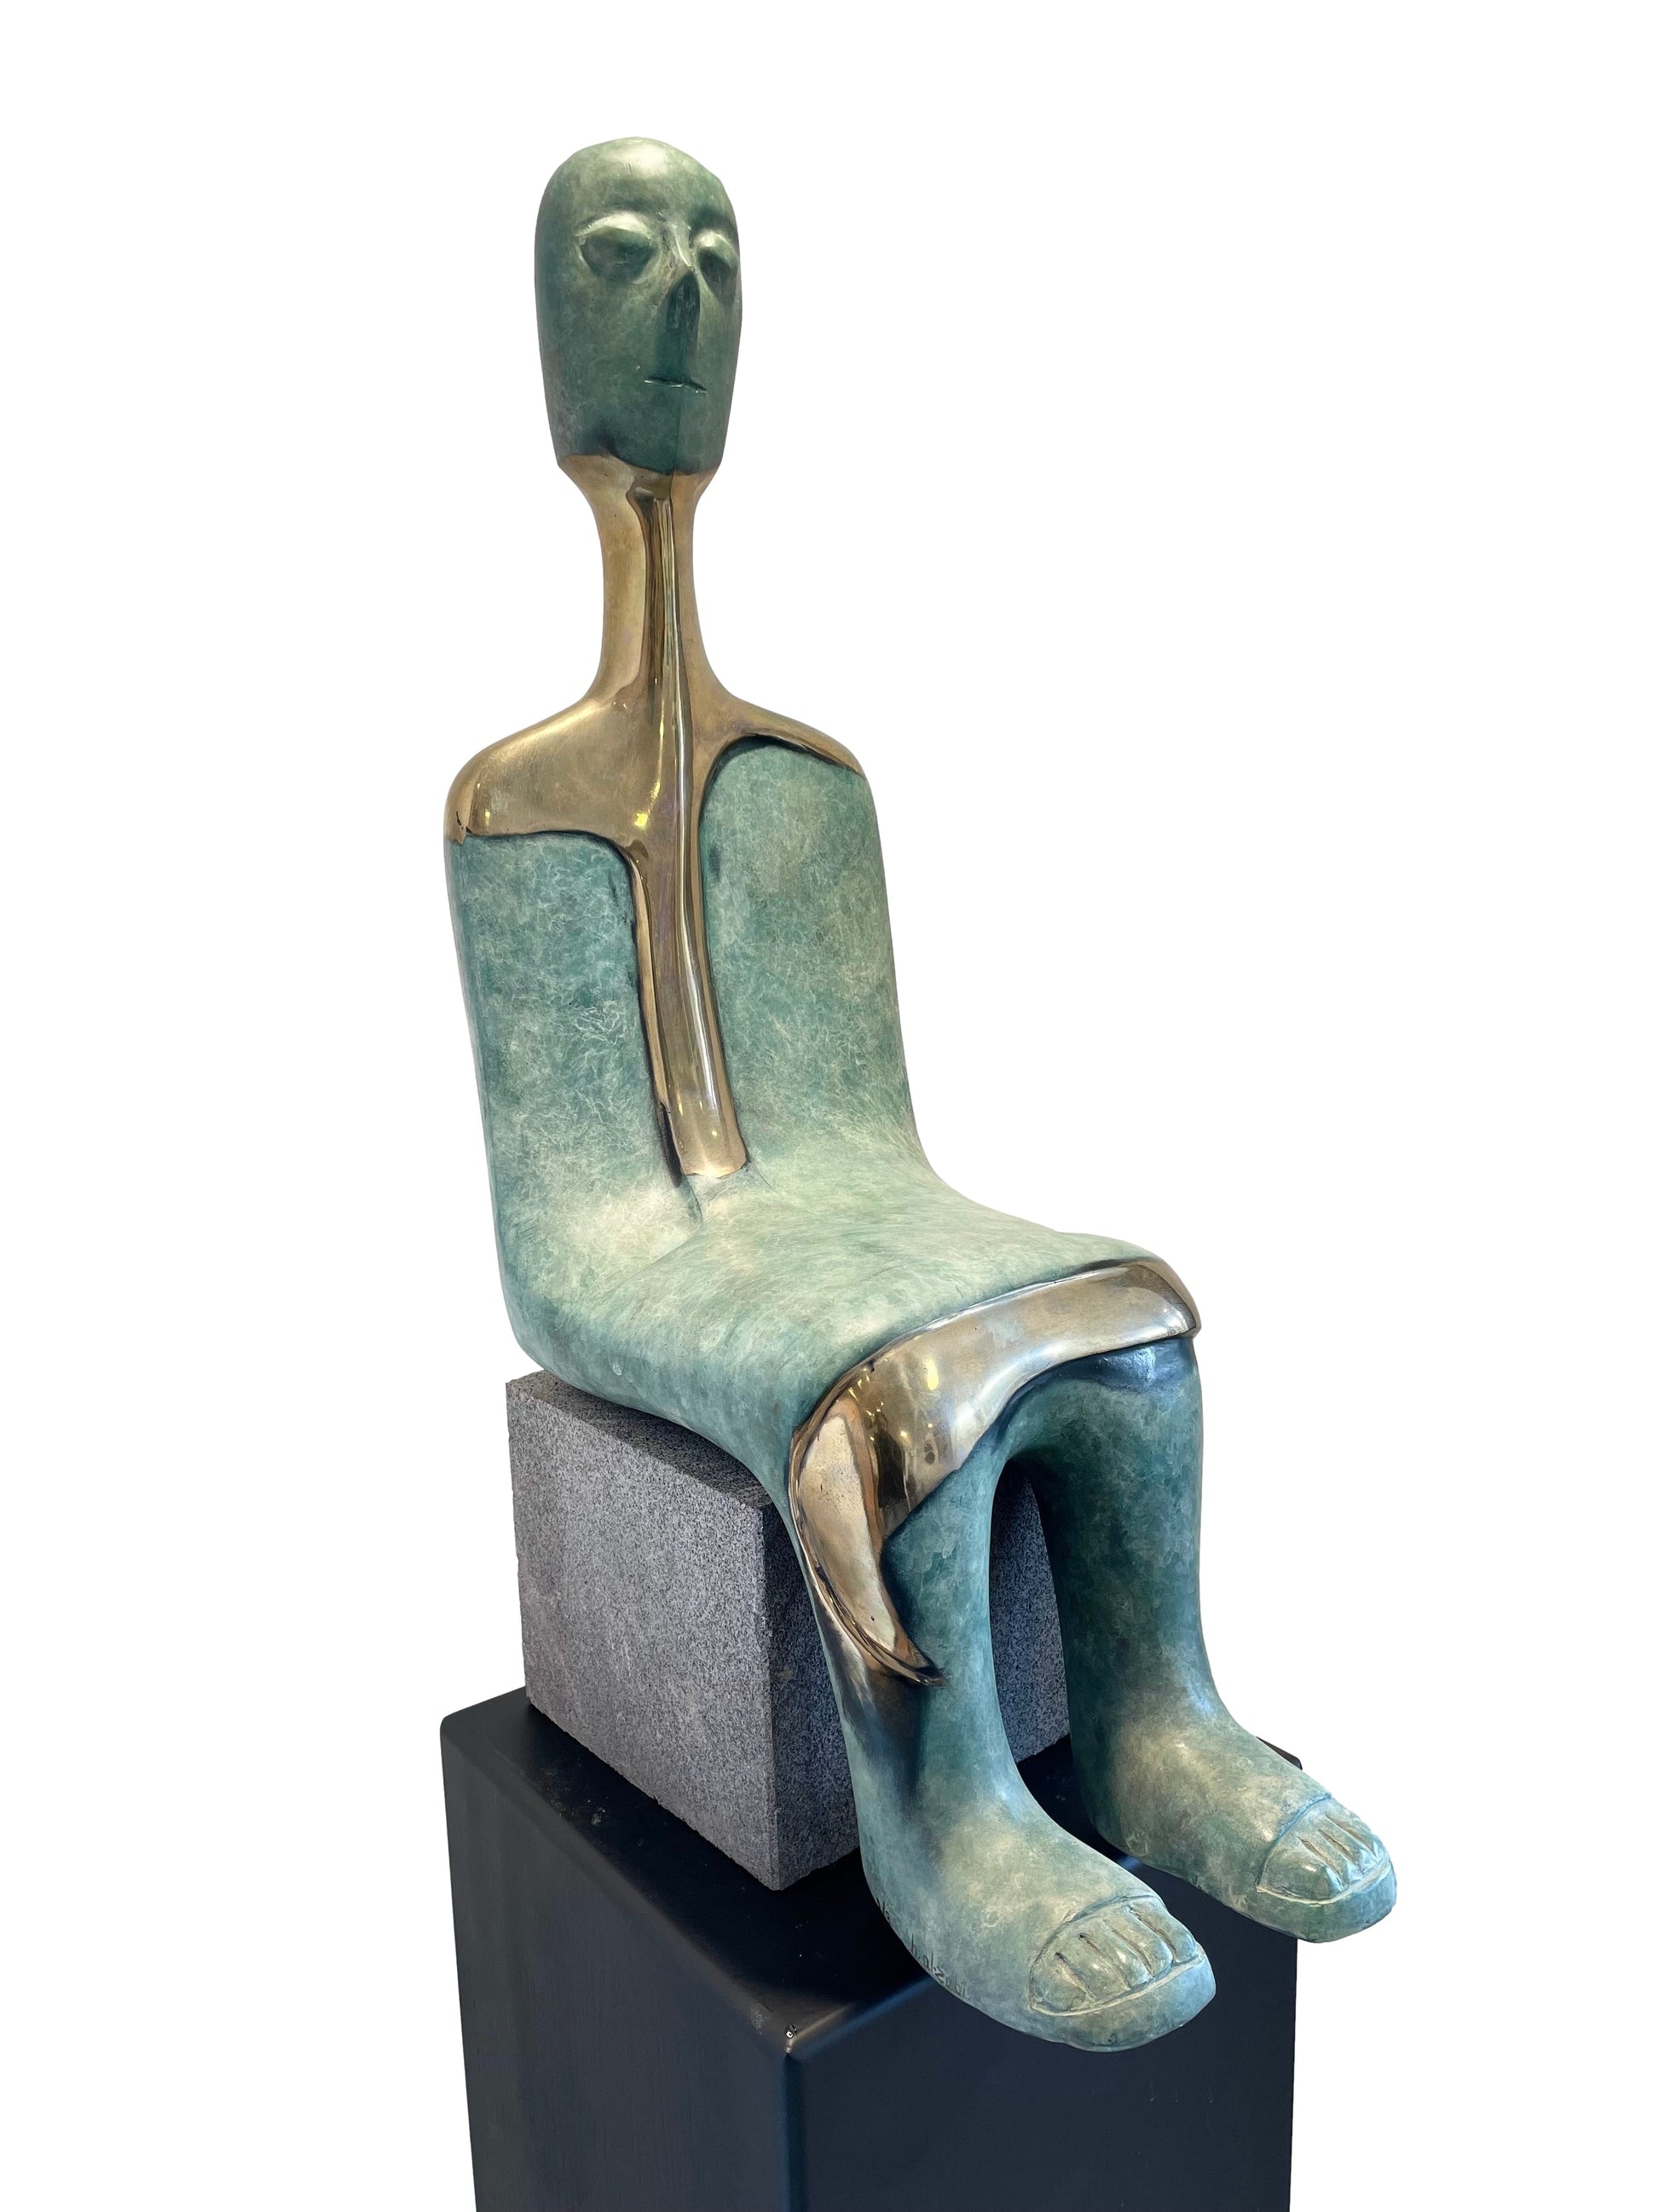 Seated Serenity - Bronze Sculpture